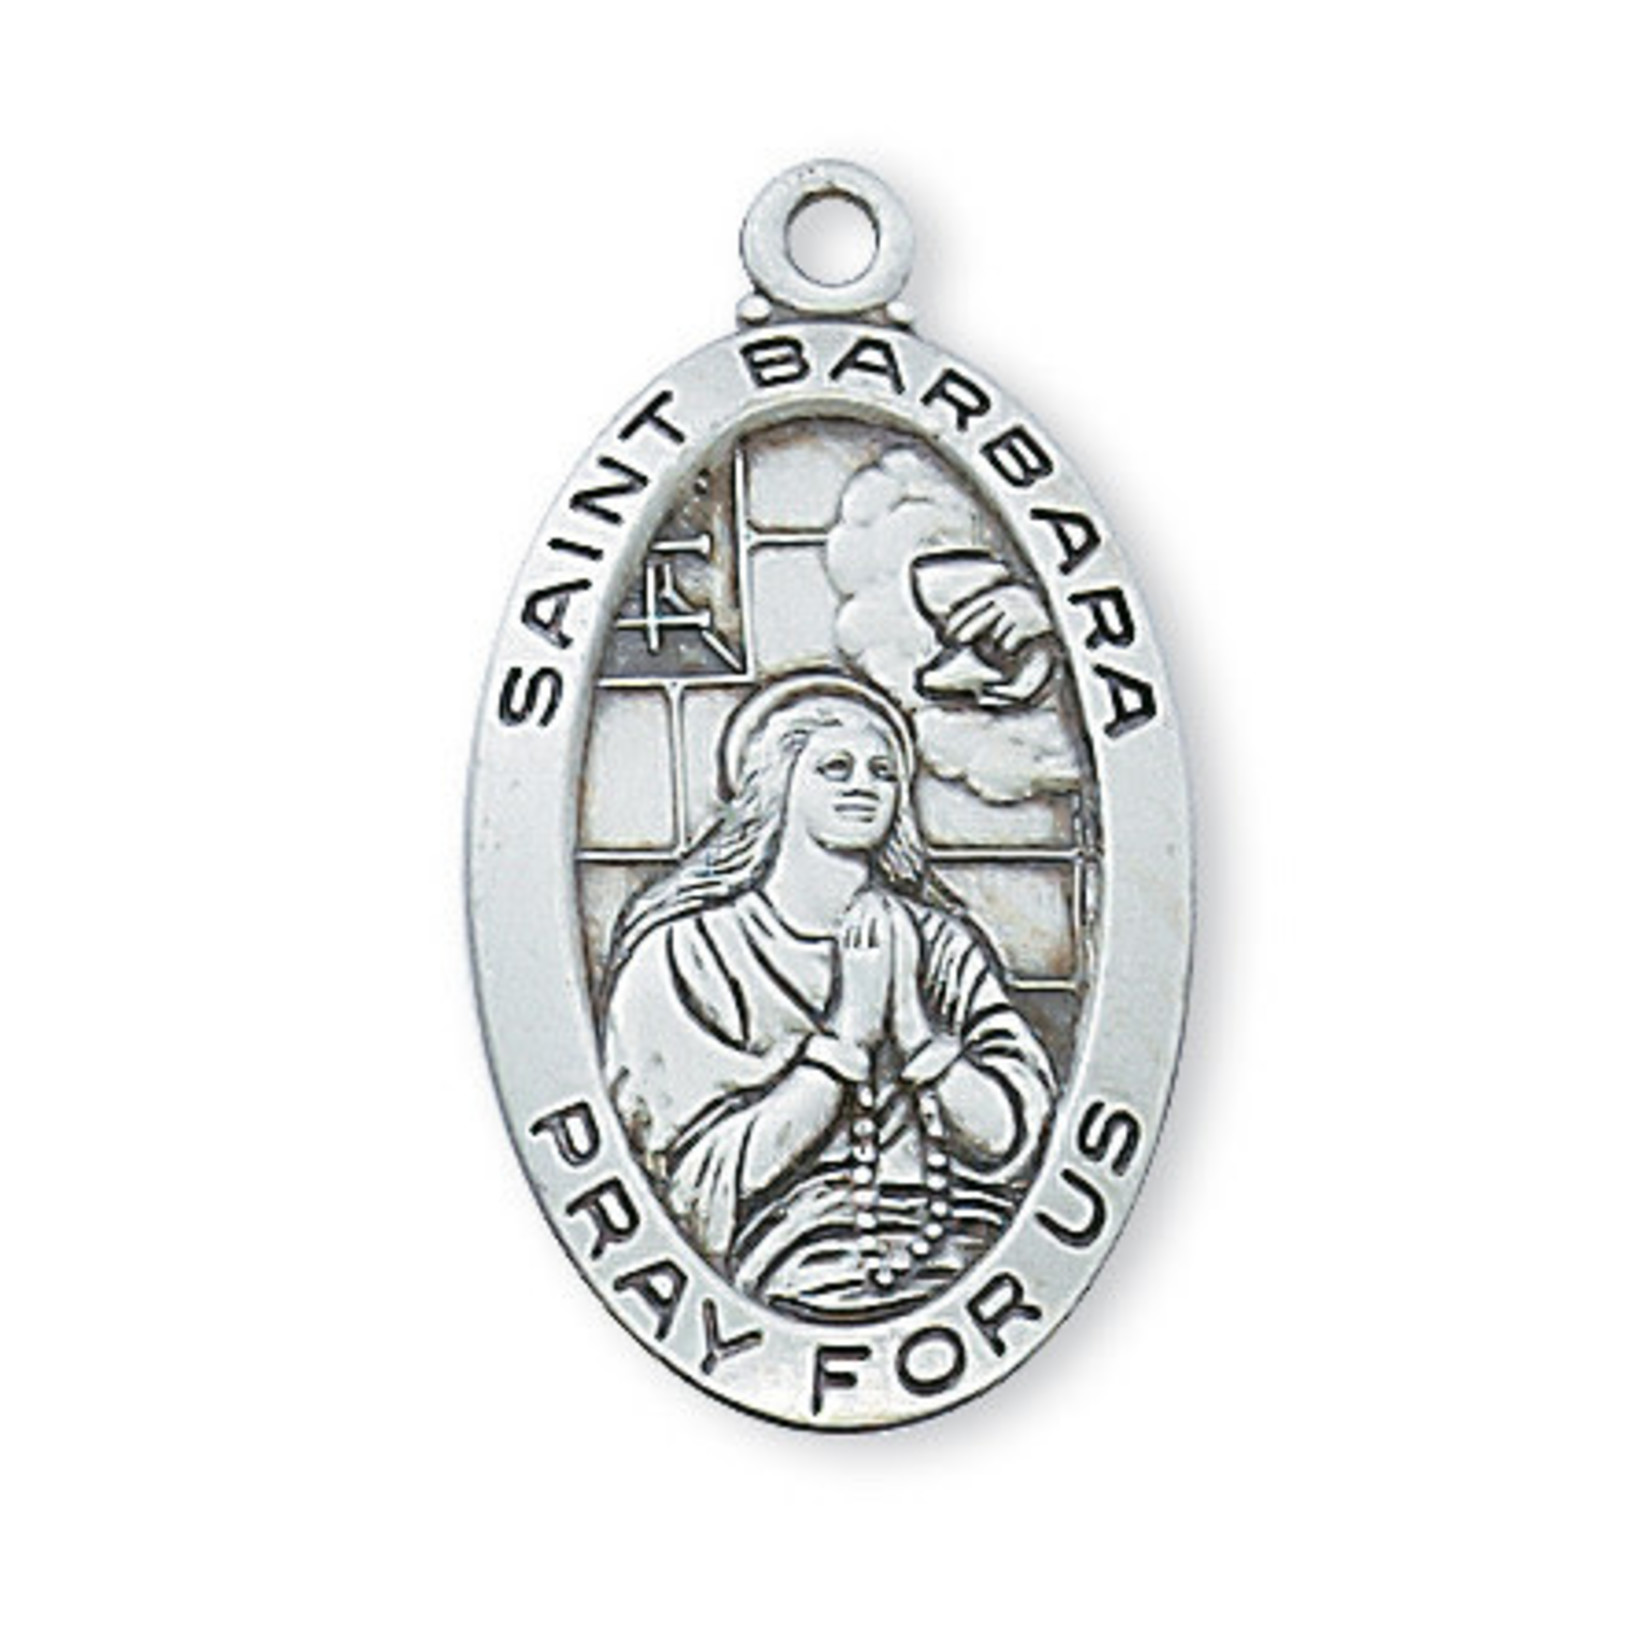 Sterling Silver St. Barbara Medal